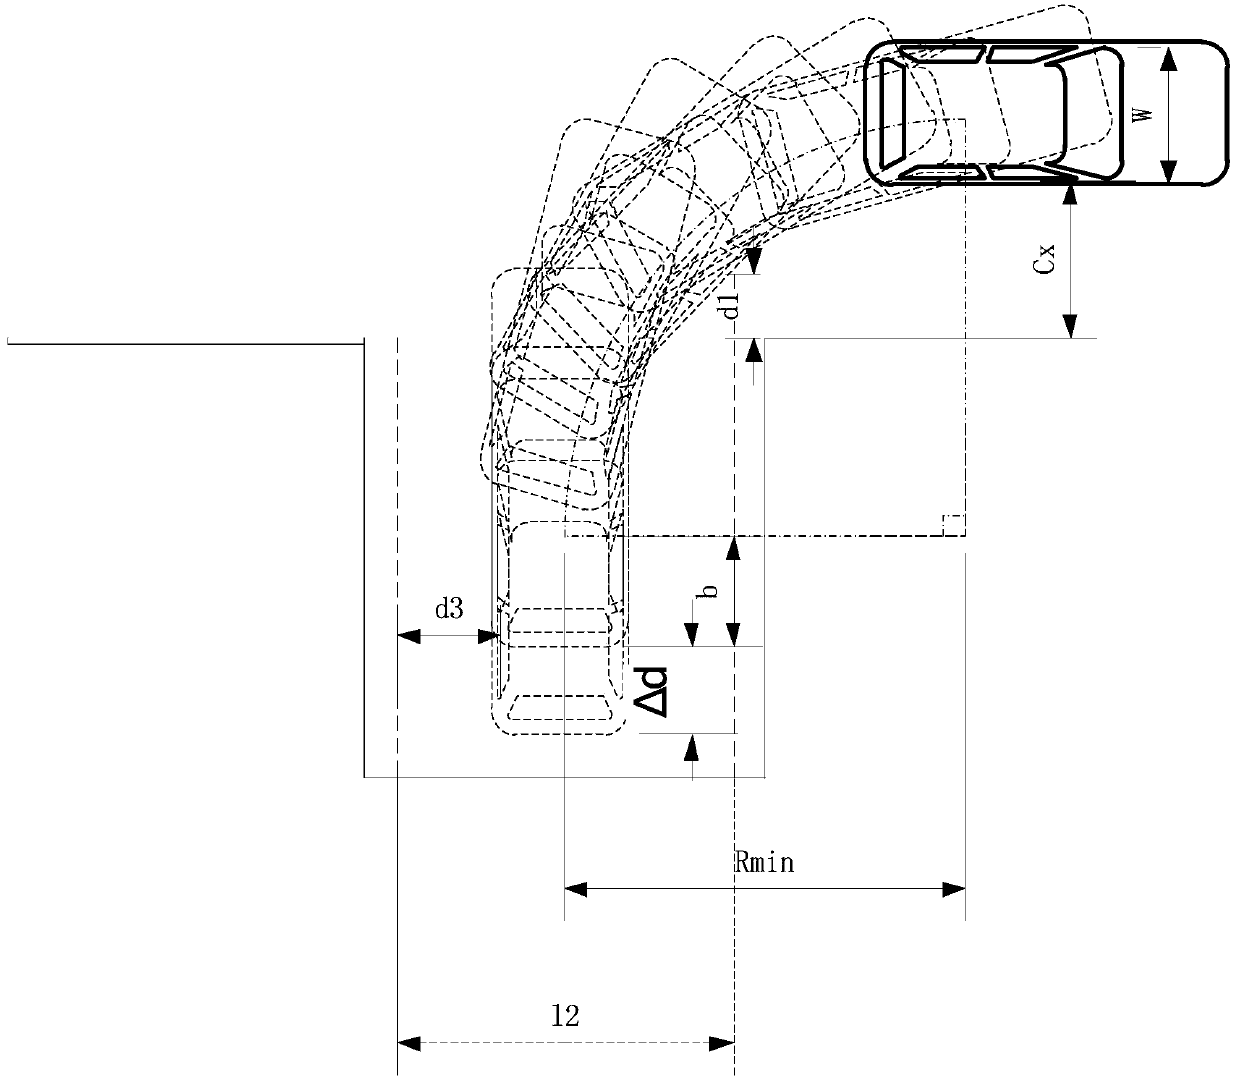 Vertical parking path planning design method